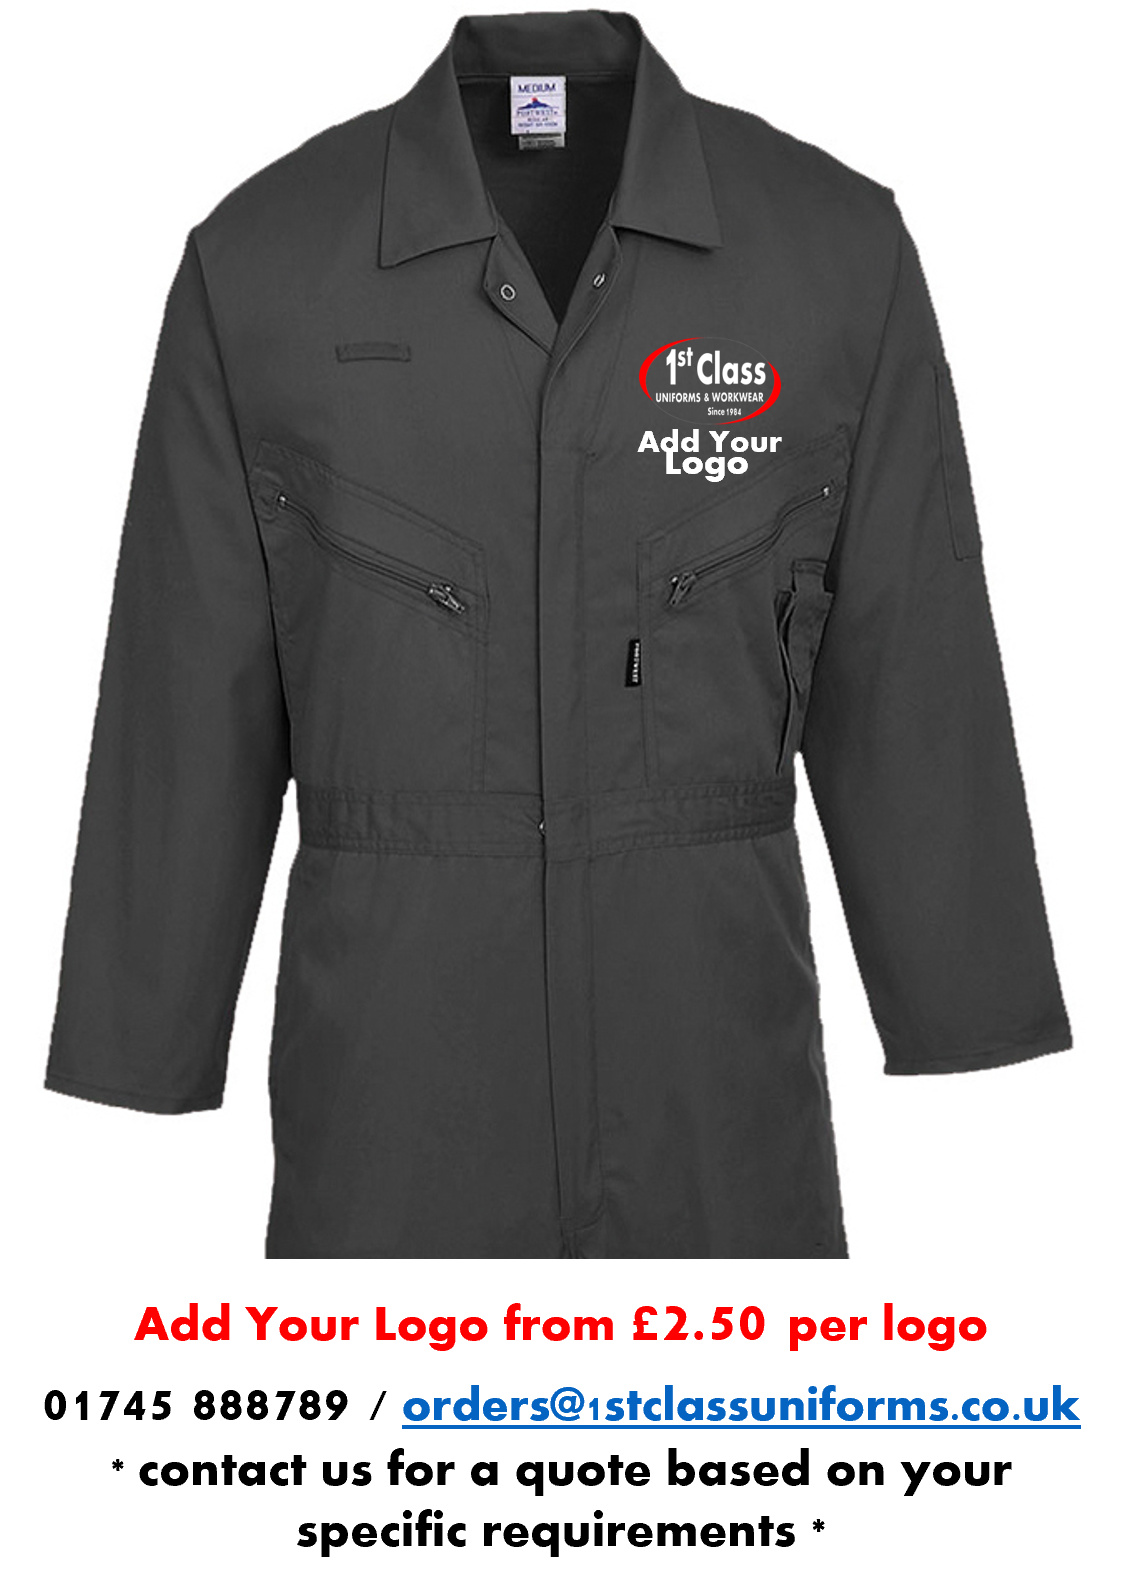 Portwest C813 Zip Front Boiler Suit/ Coverall